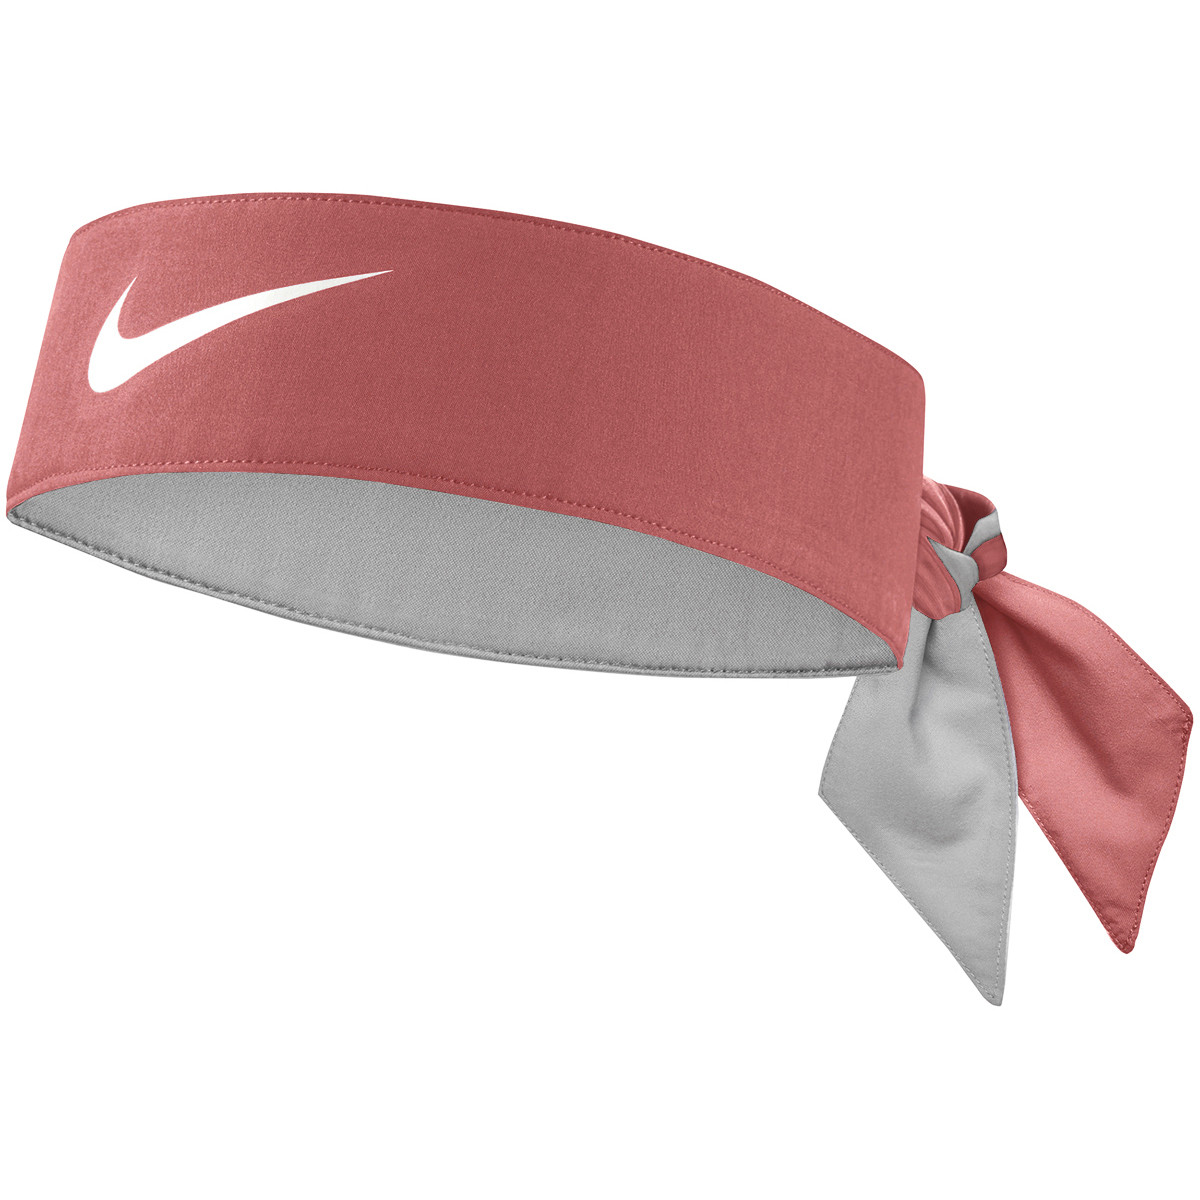 Bandeau Nike Swoosh Rouge - Bandeau, bandana - Tennis Achat